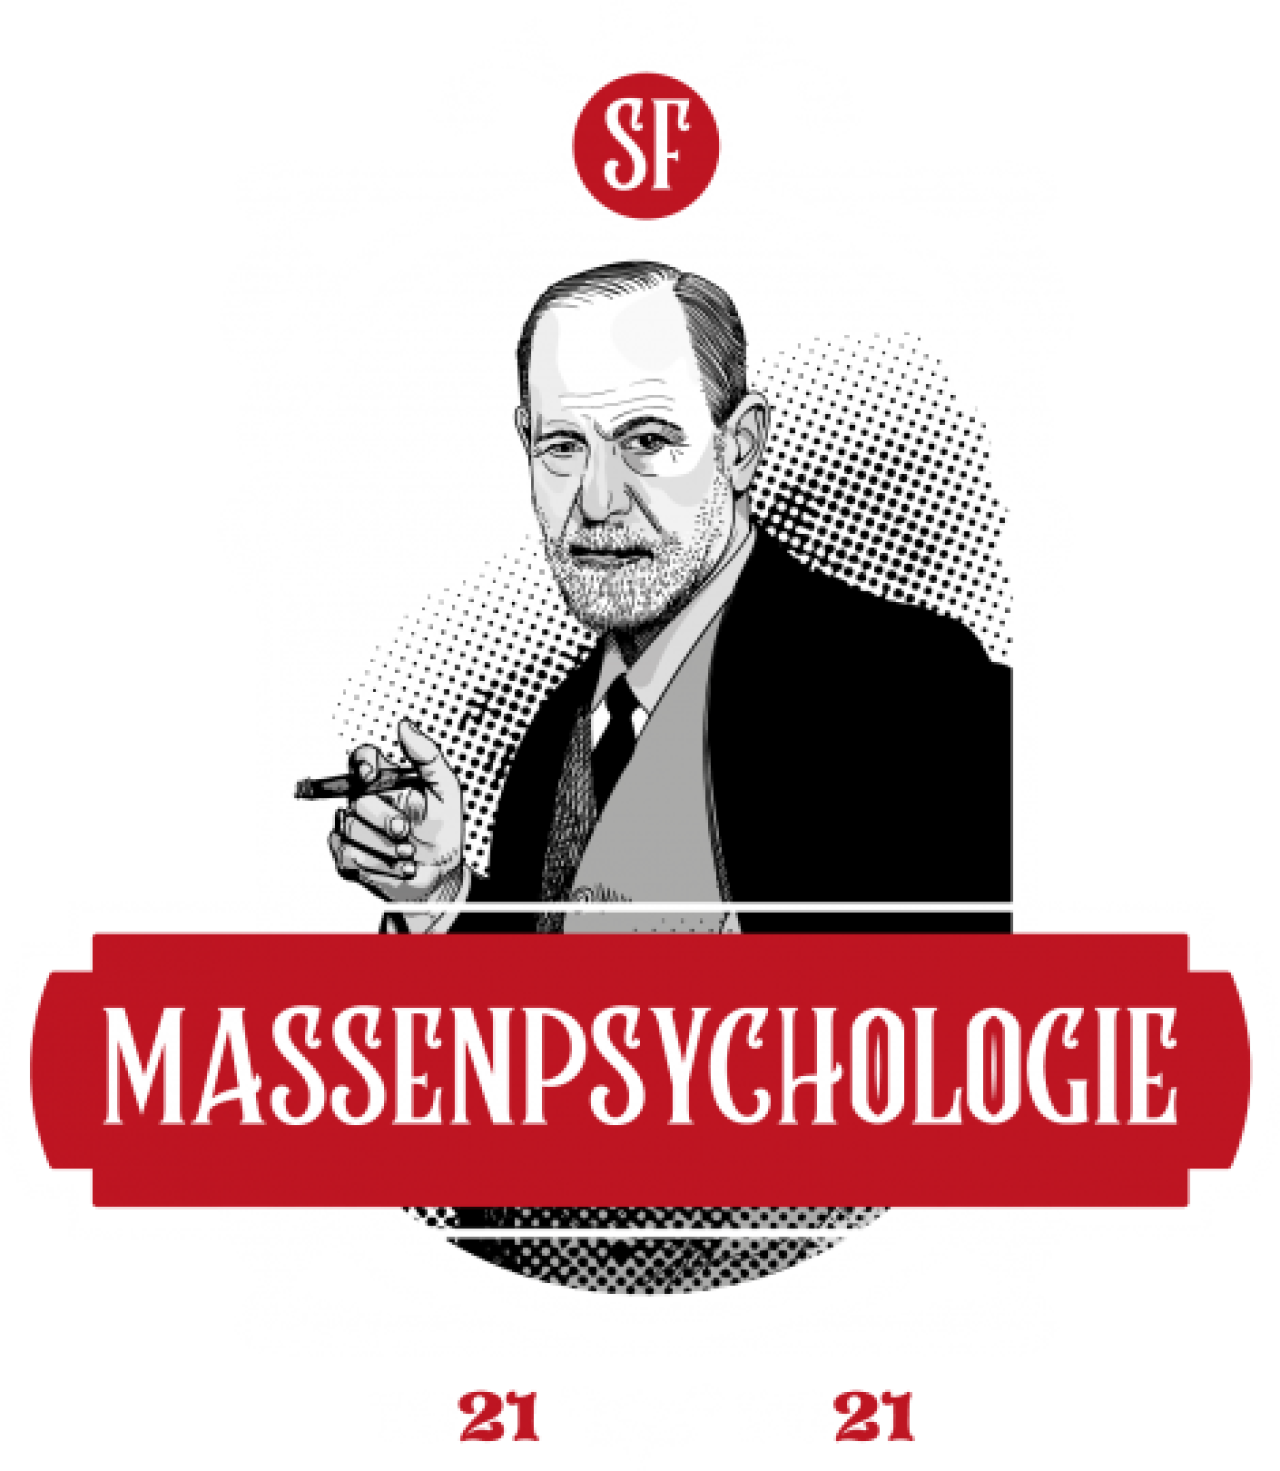 Massenpsychologie